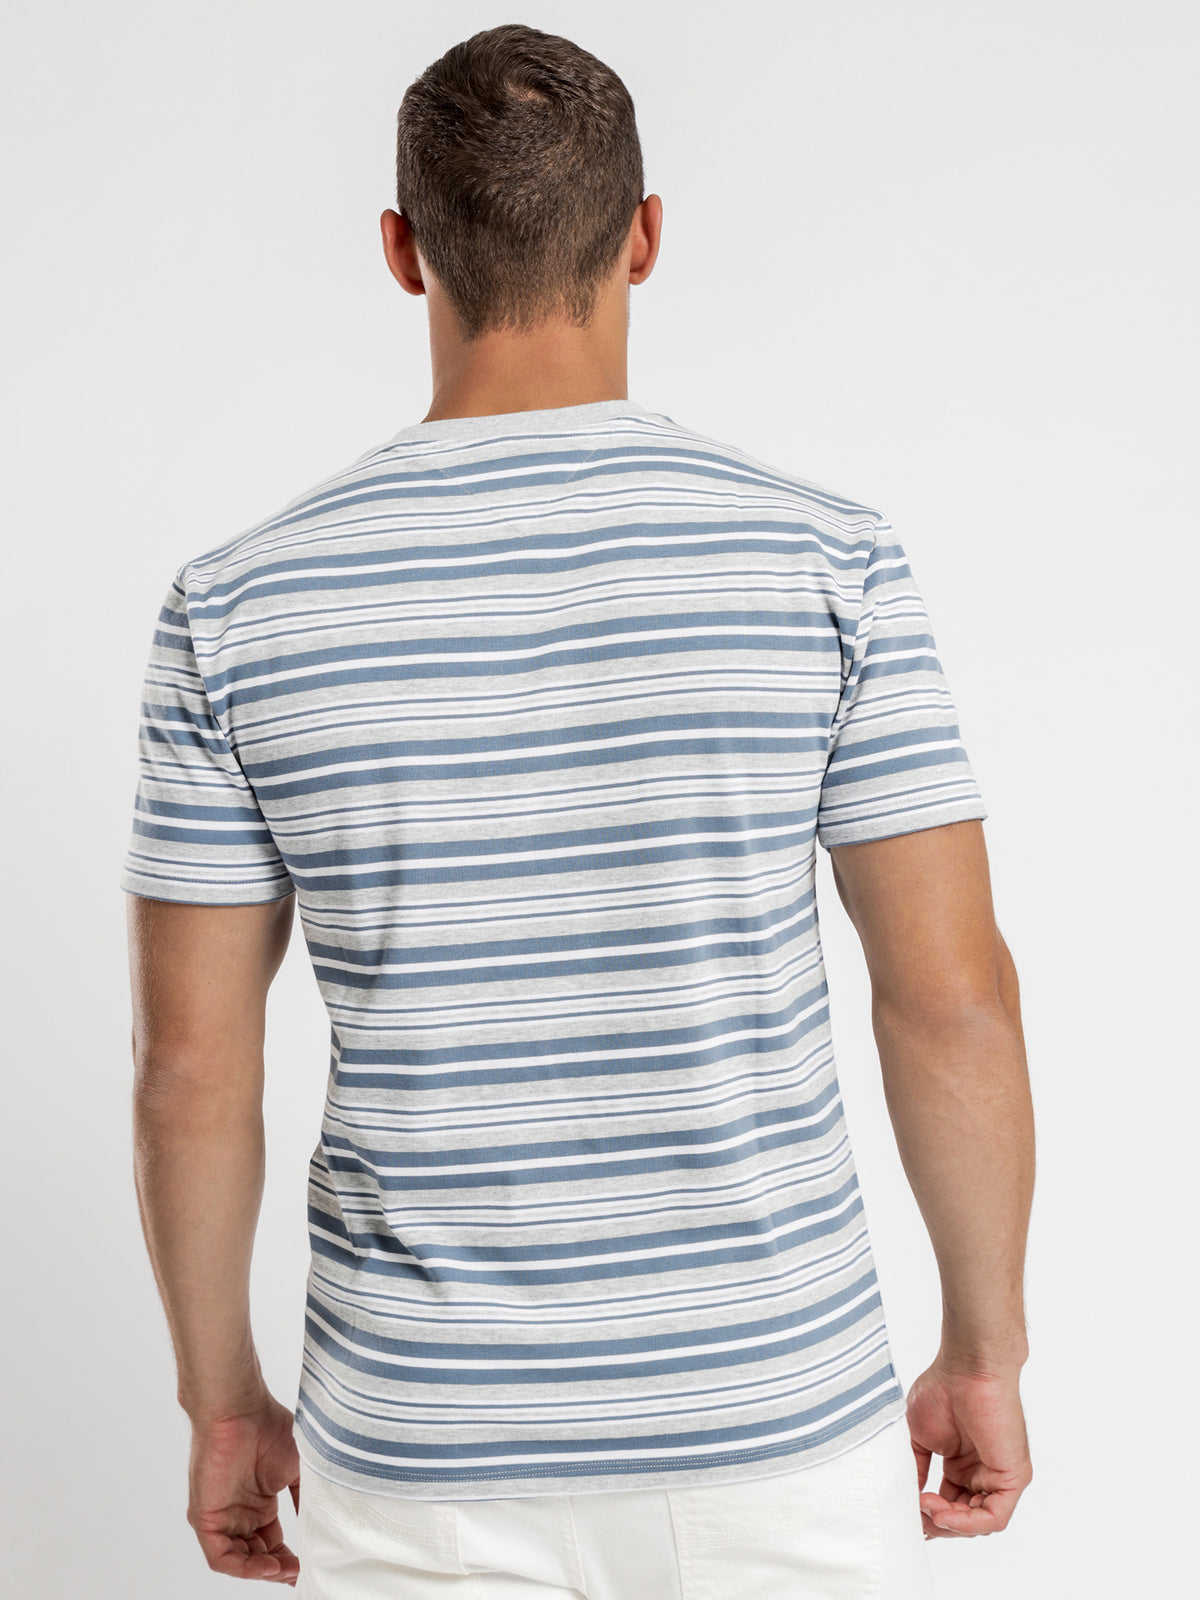 Stripe Pocket T-Shirt in Grey Heather Stripe